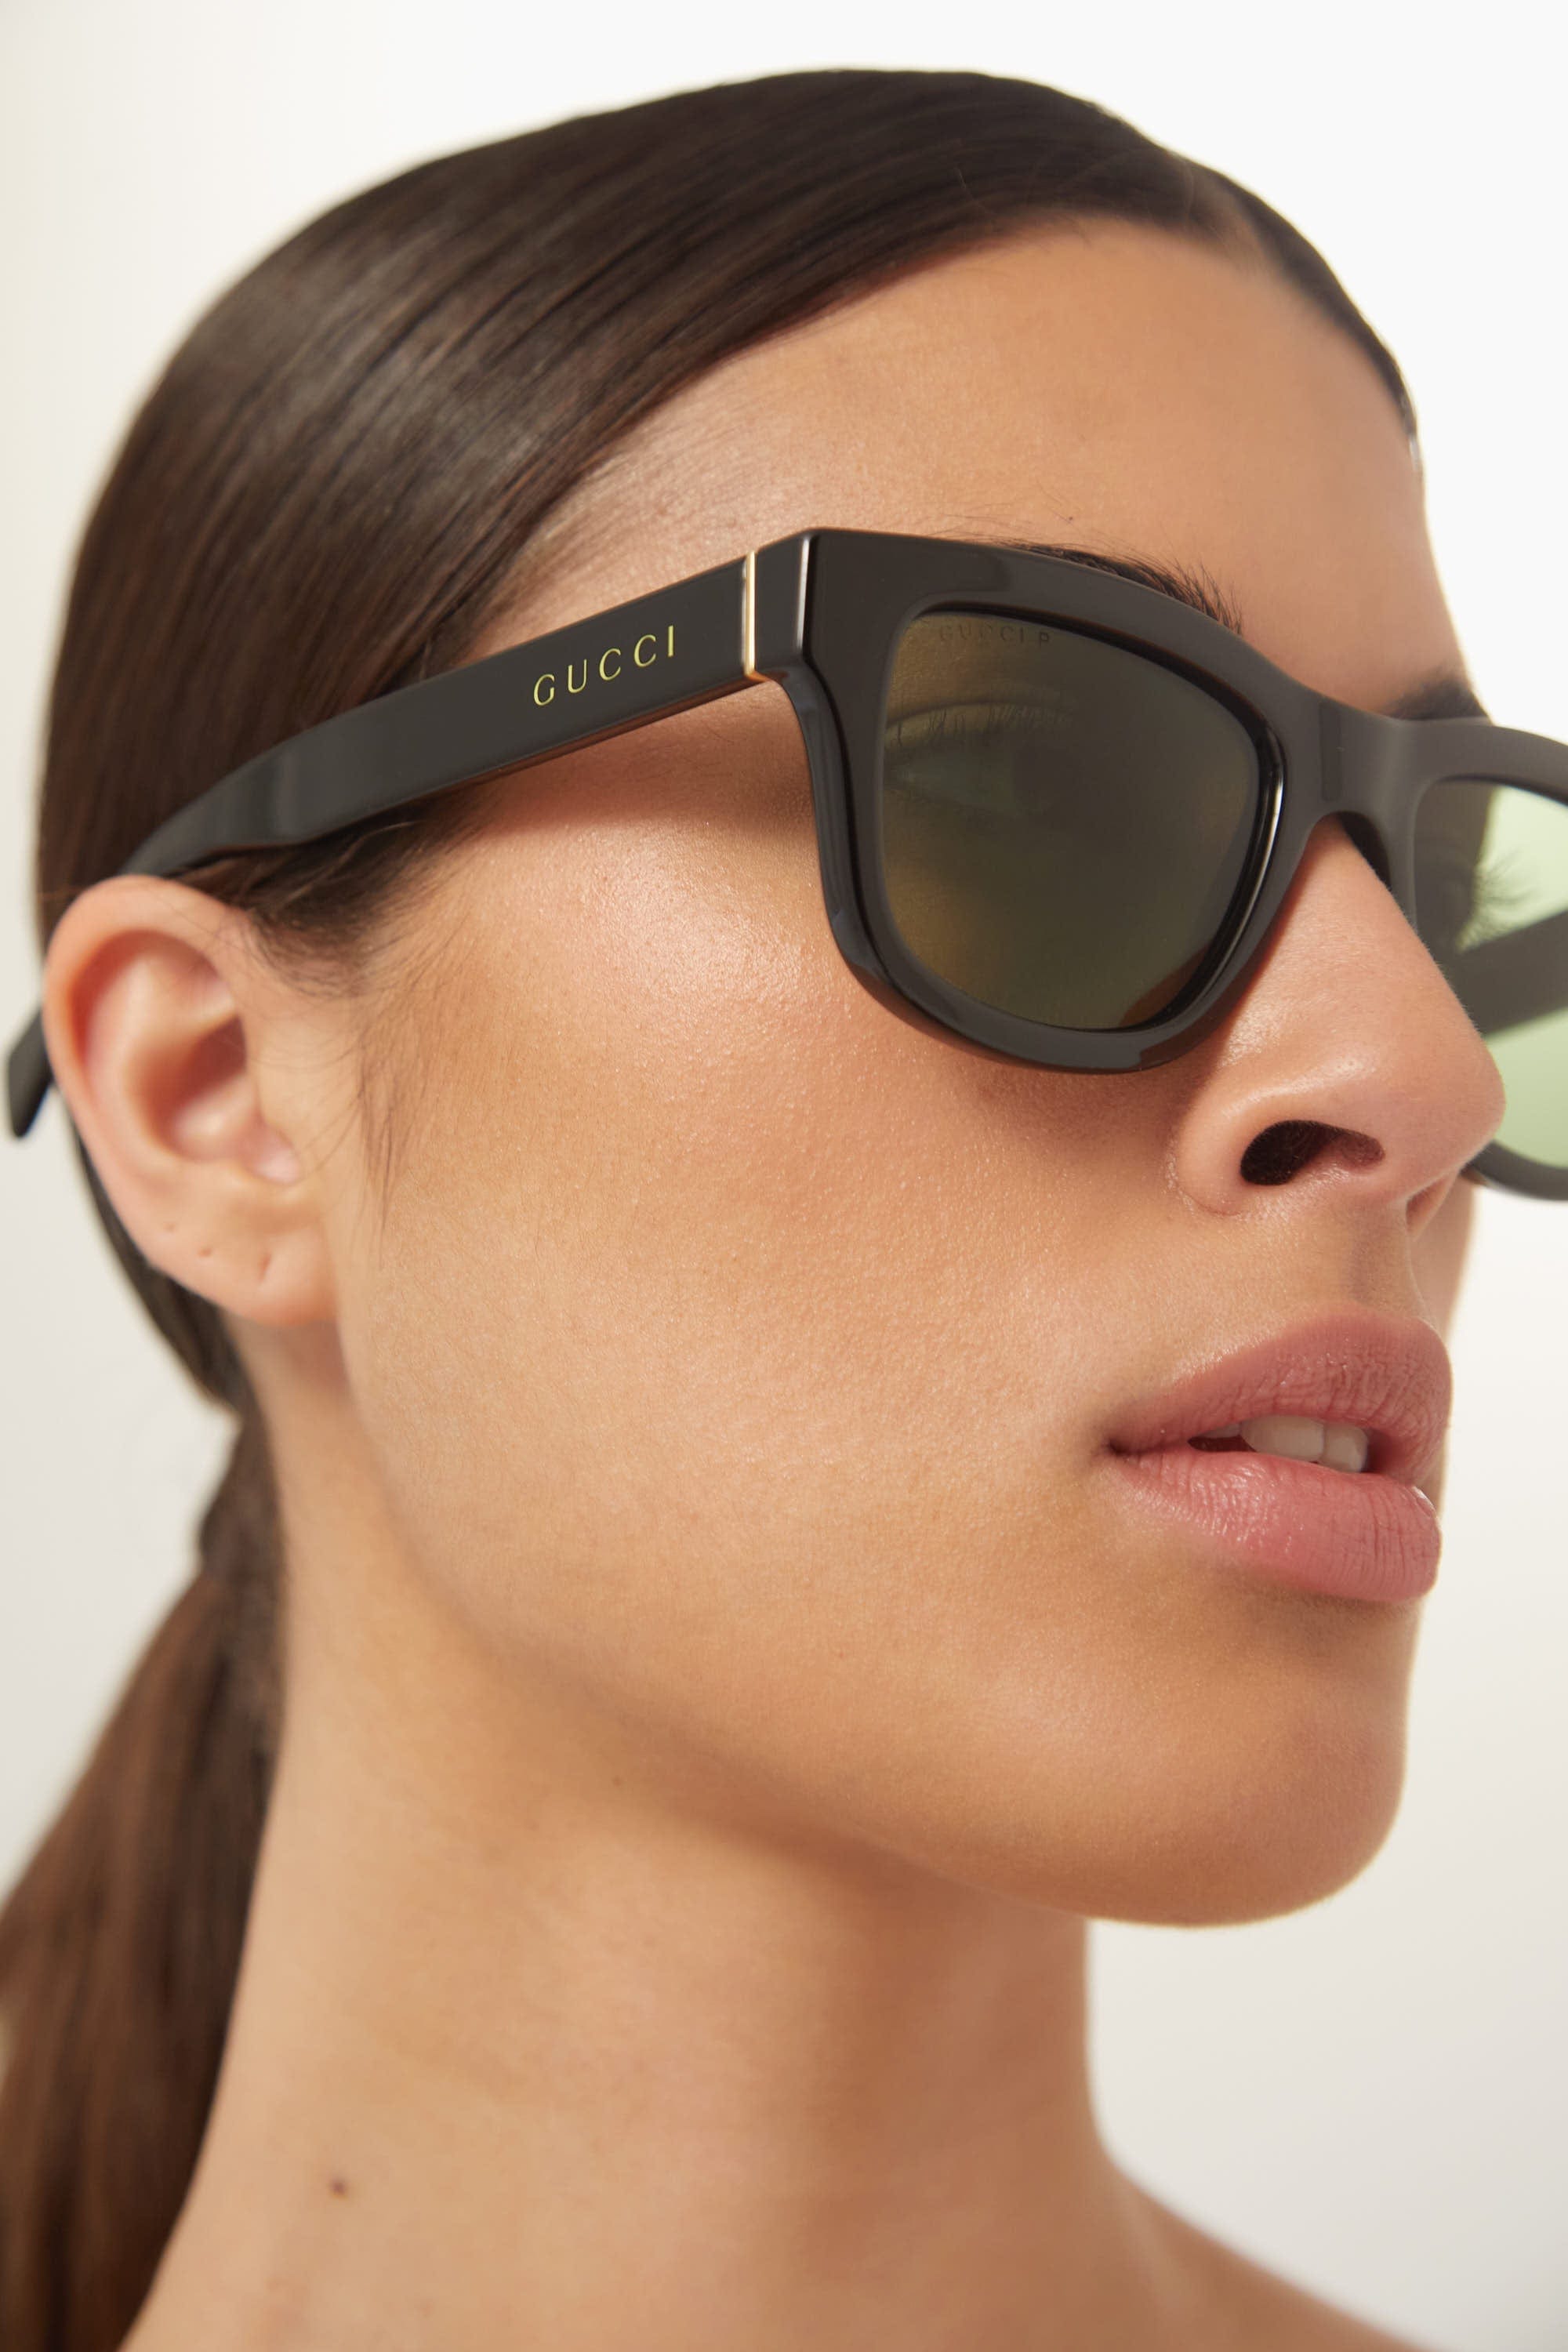 Gucci soft squared black and green sunglasses - Eyewear Club